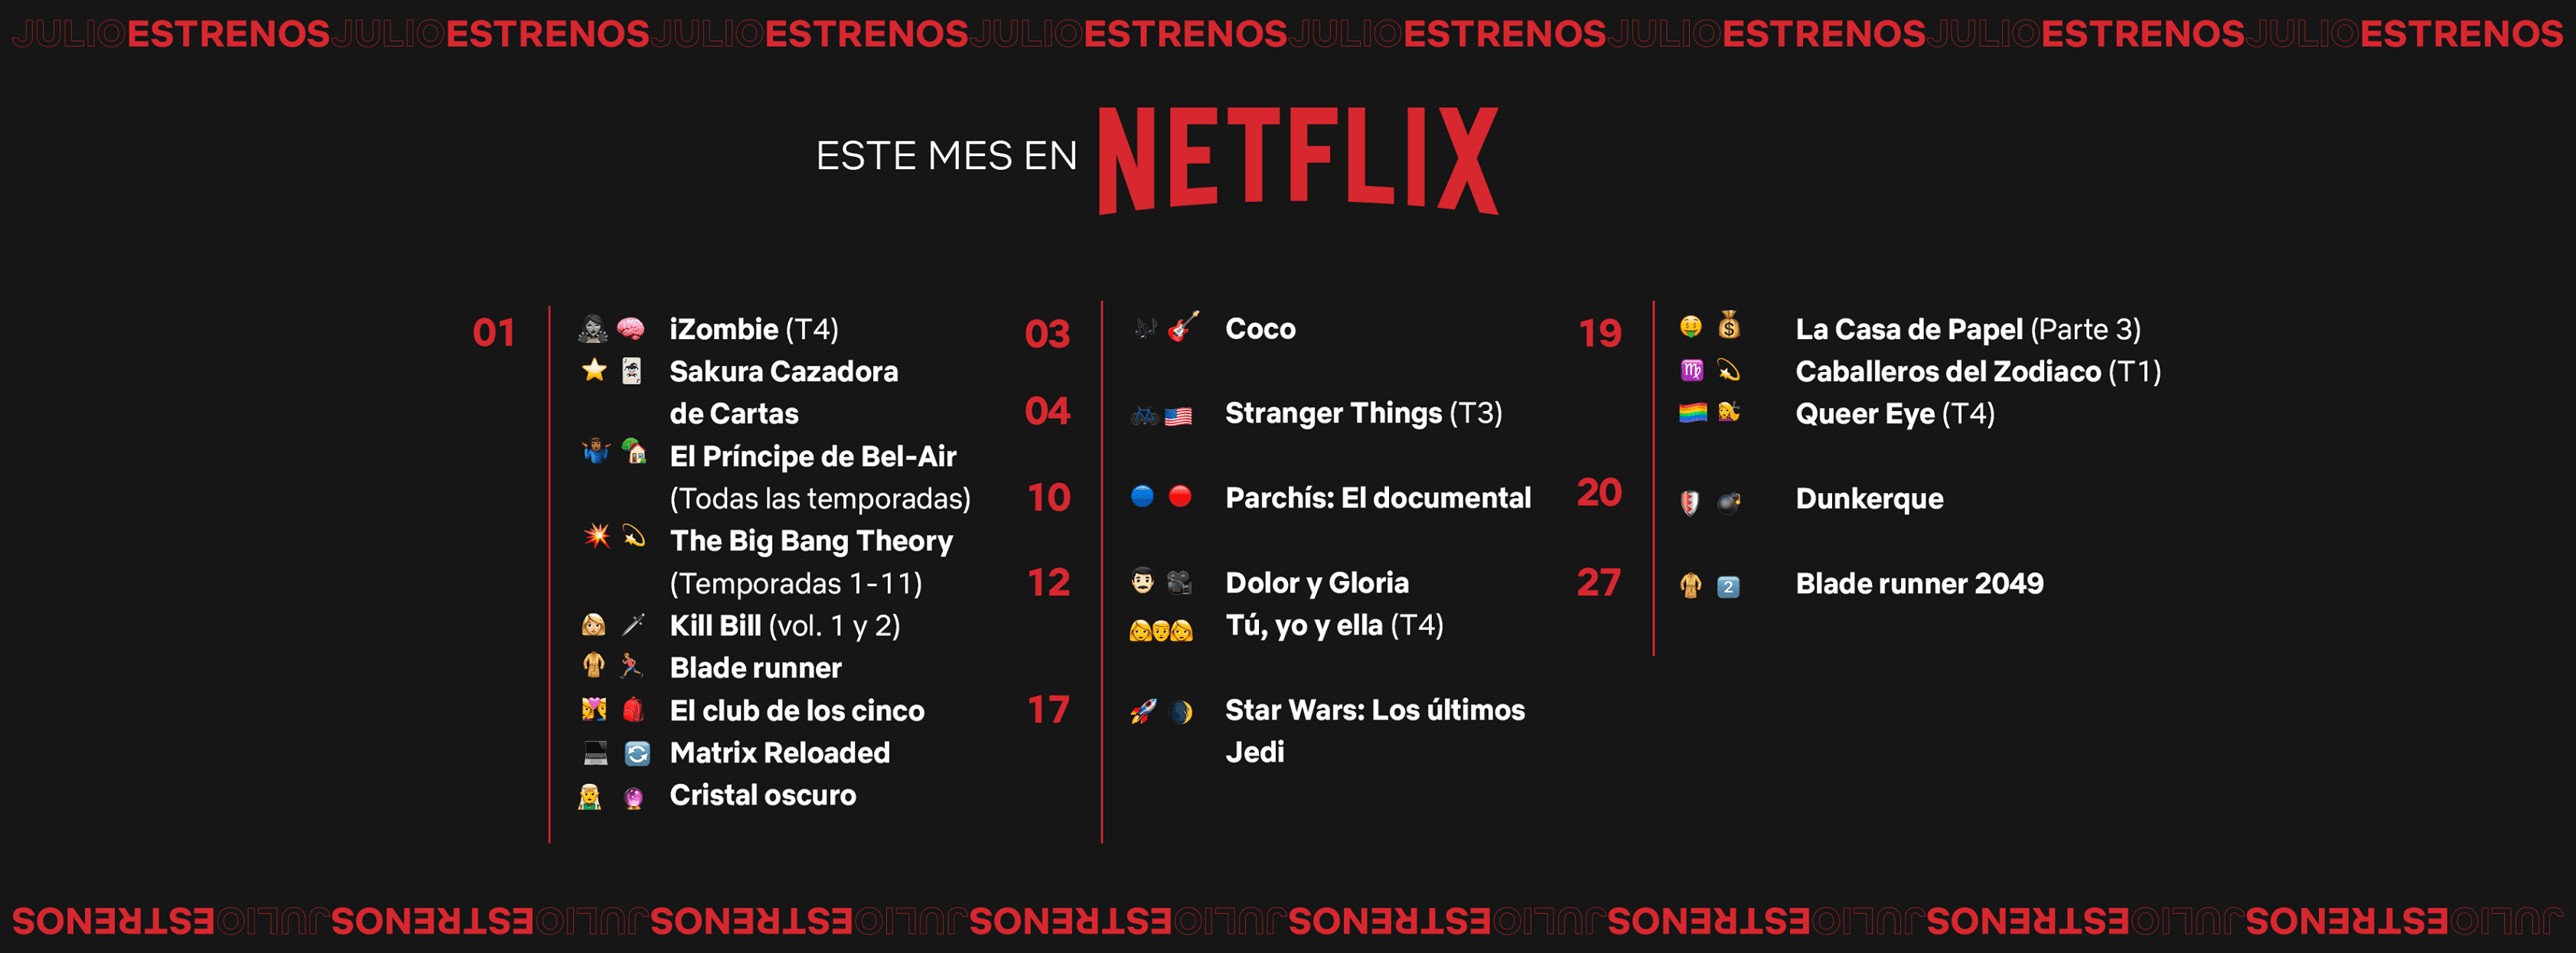 Estrenos de Netflix España en julio de 2017